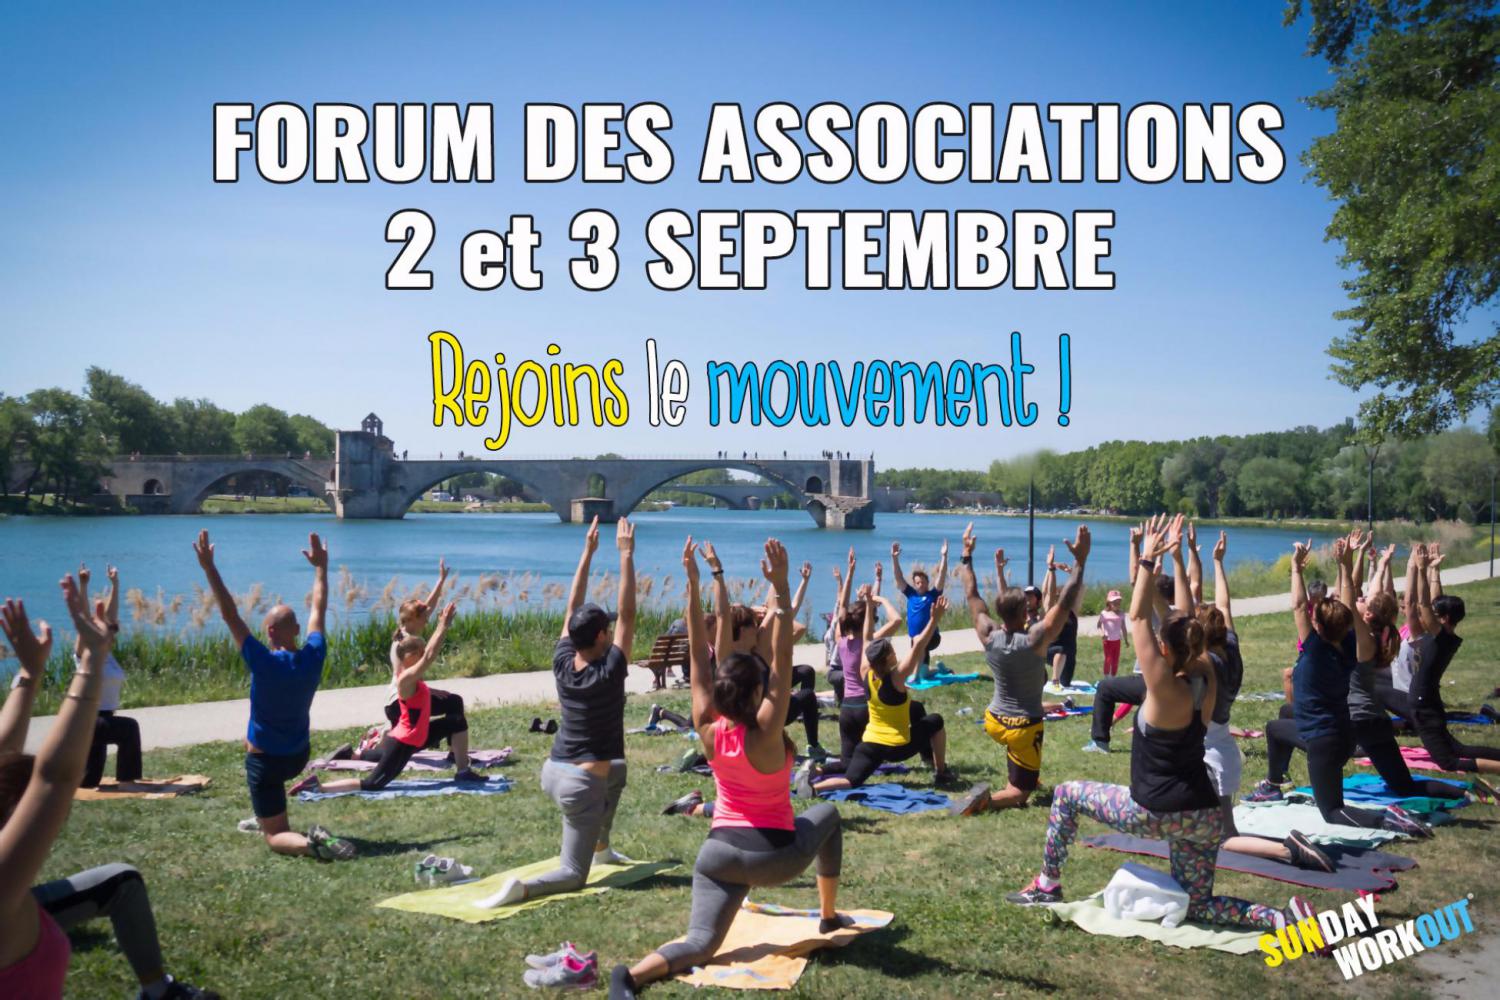 Forum des Associations - Sunday Workout